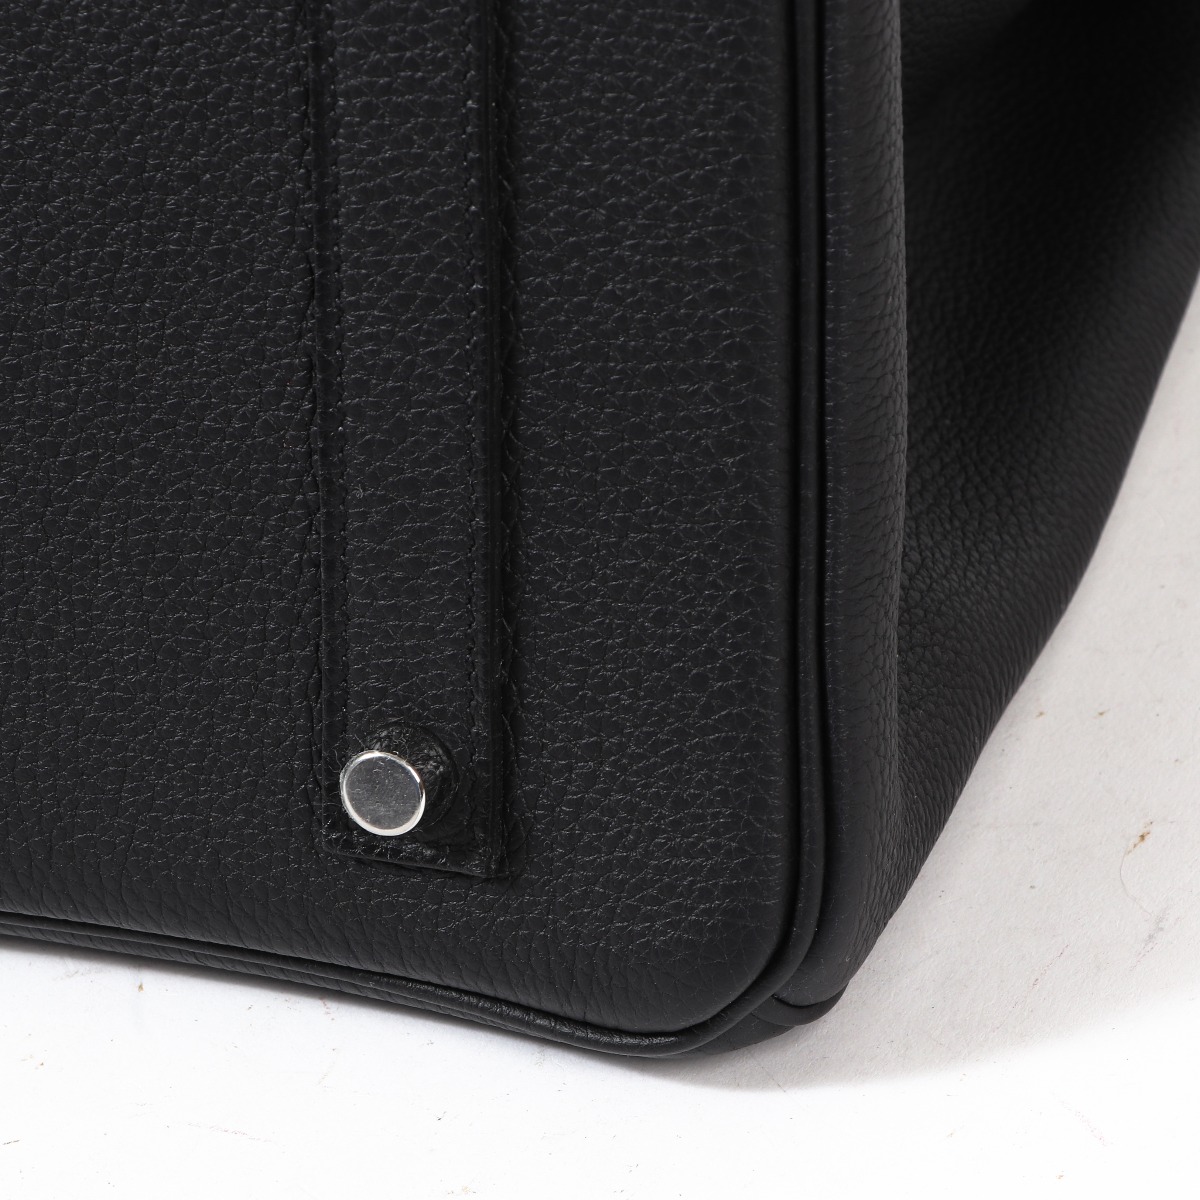 Hermès Birkin 35 Black Togo Palladium Hardware ○ Labellov ○ Buy and Sell  Authentic Luxury